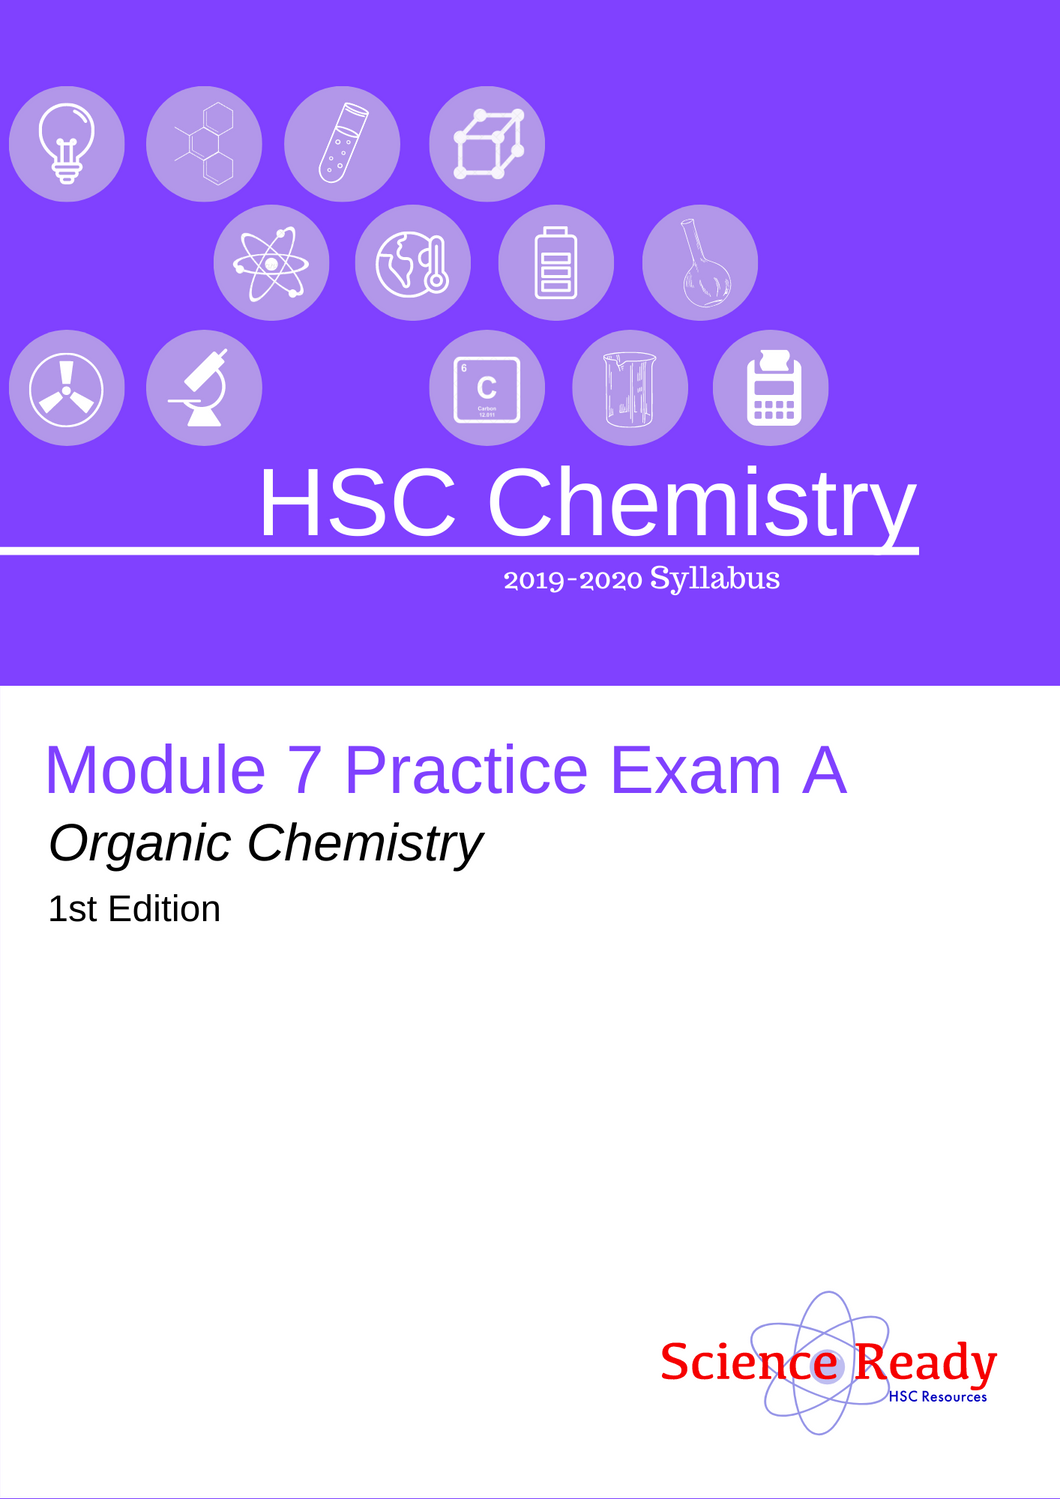 HSC Chemistry Module 7 Practice Exam A